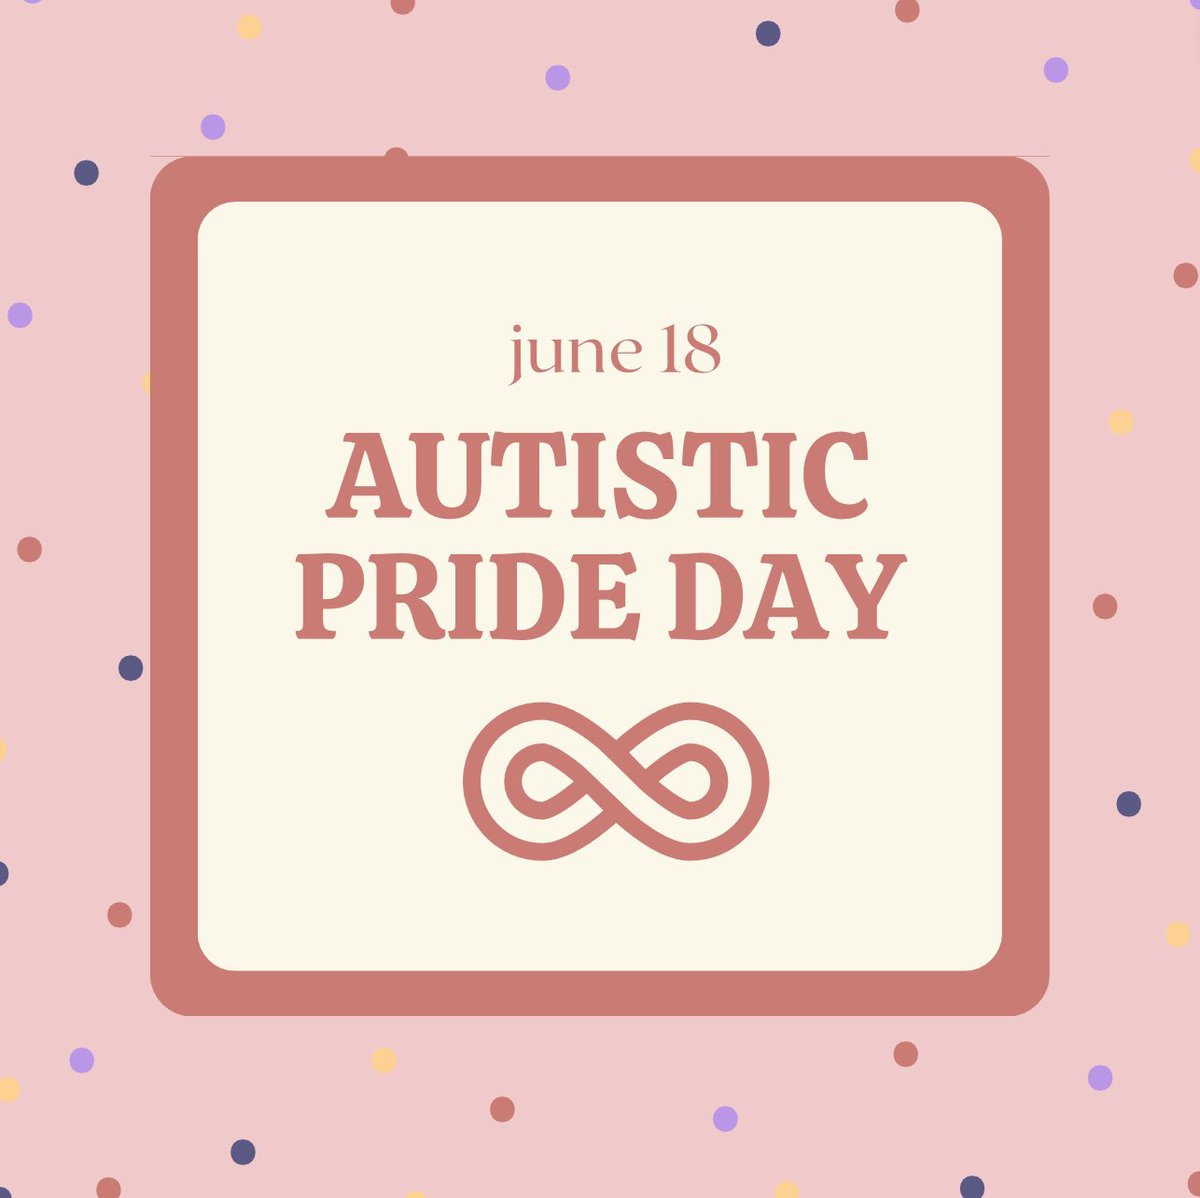 Happy #AutisticPrideDay! We will always be proud of who we are 🌈♾️